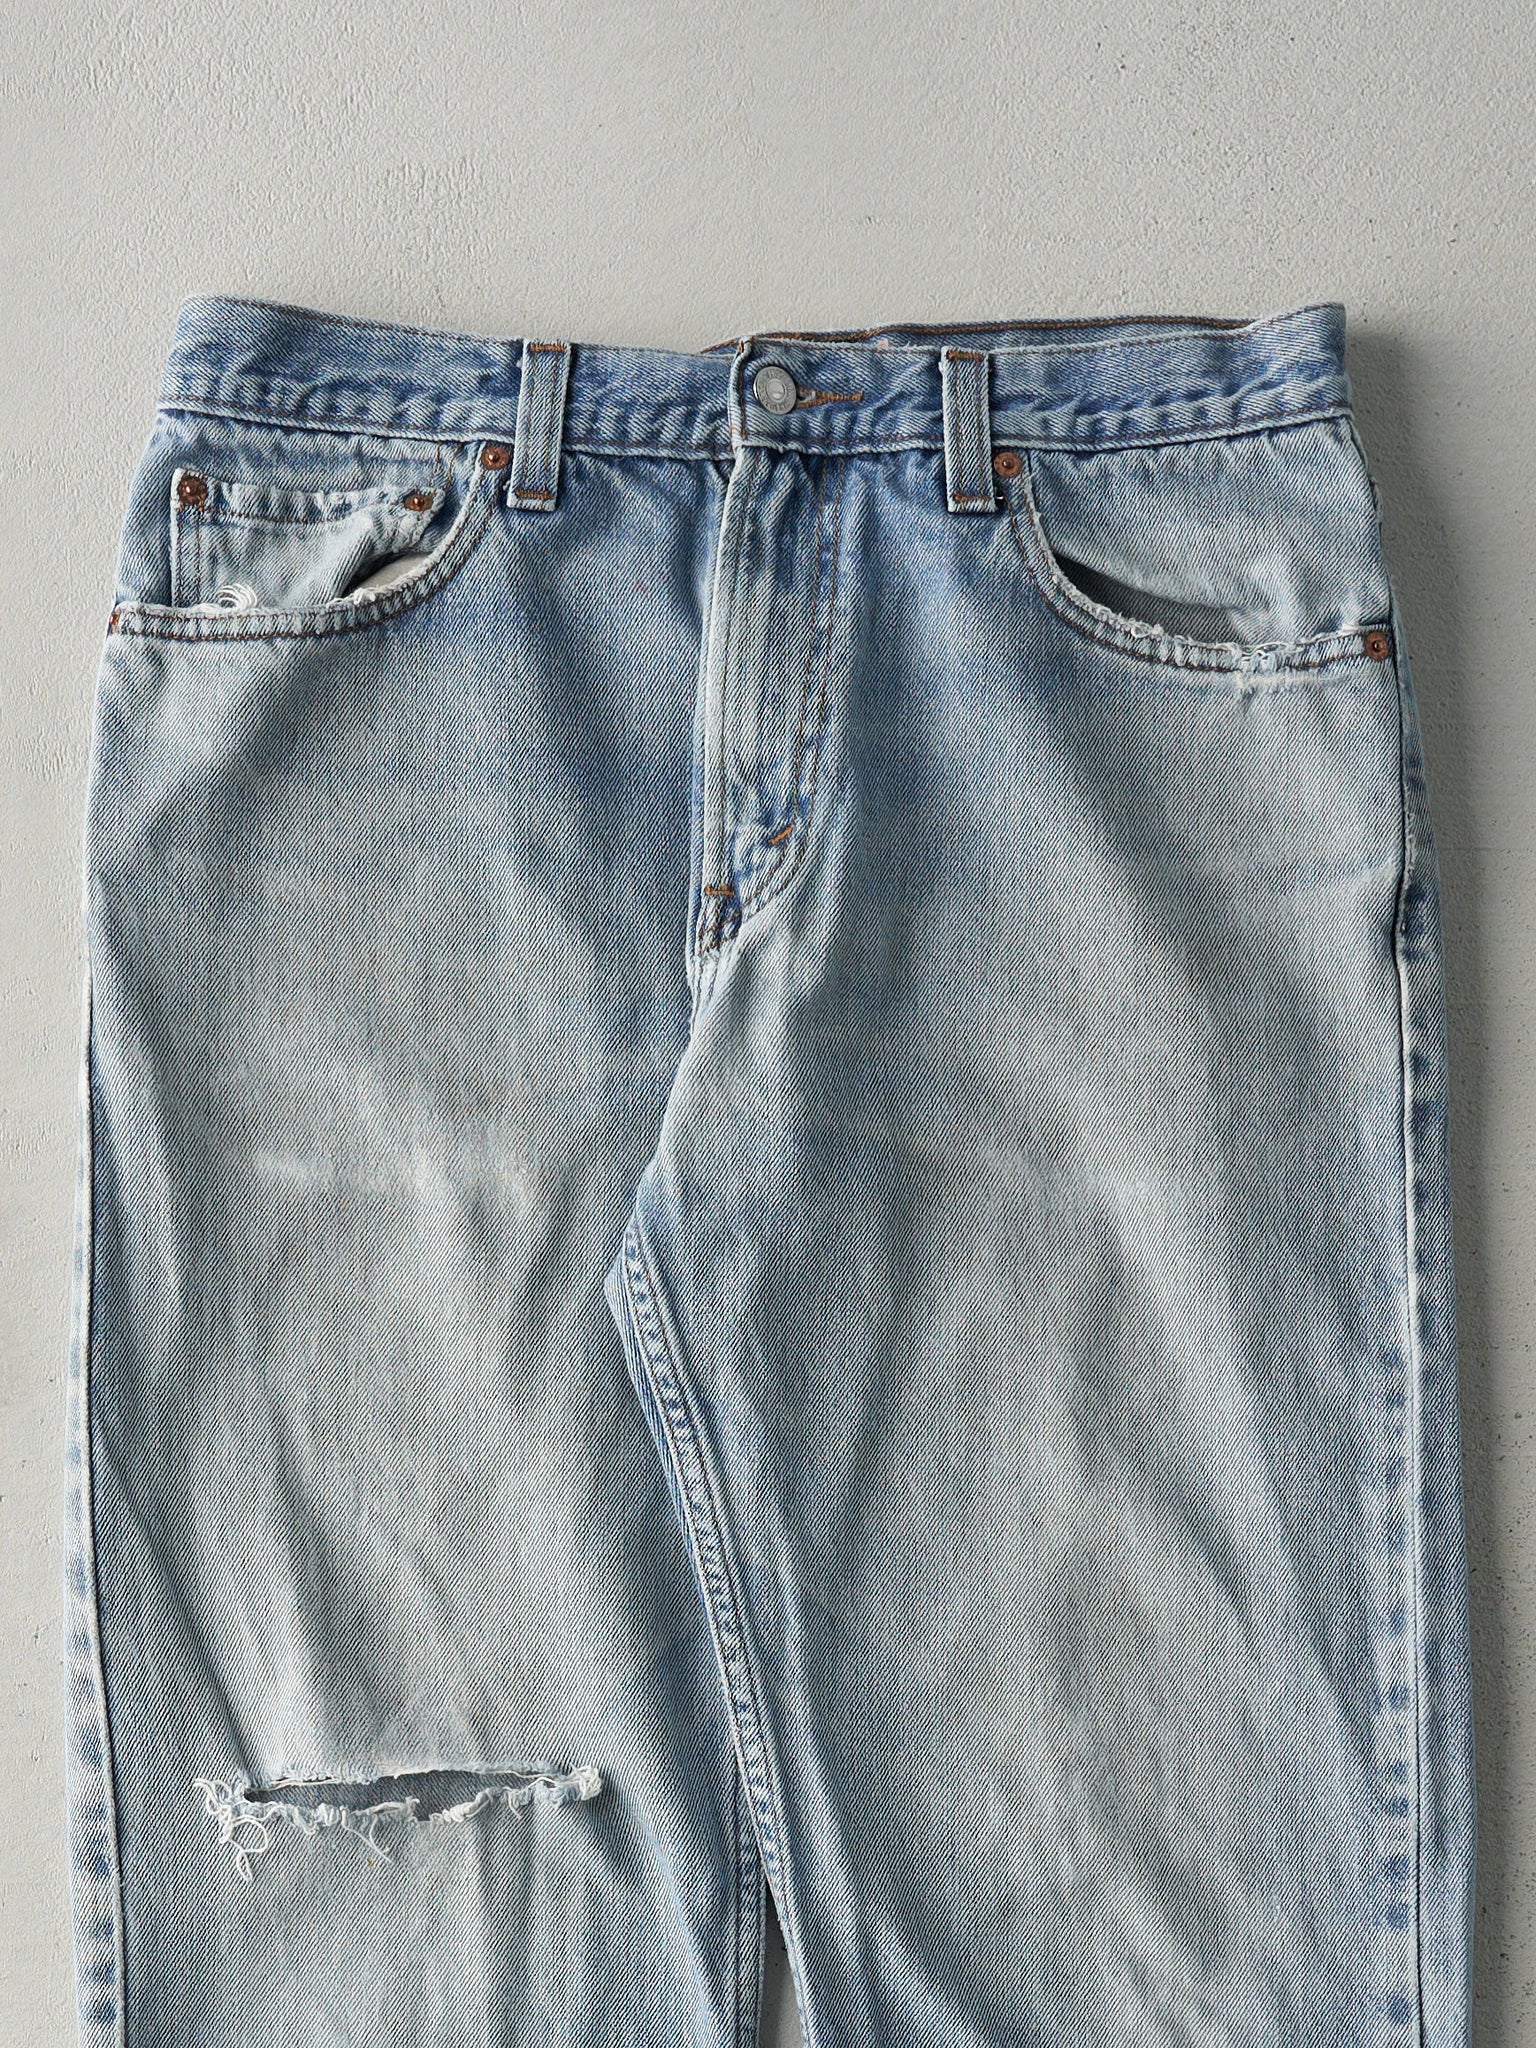 Vintage Y2K Light Wash Levi's 505 Jeans (32x30)